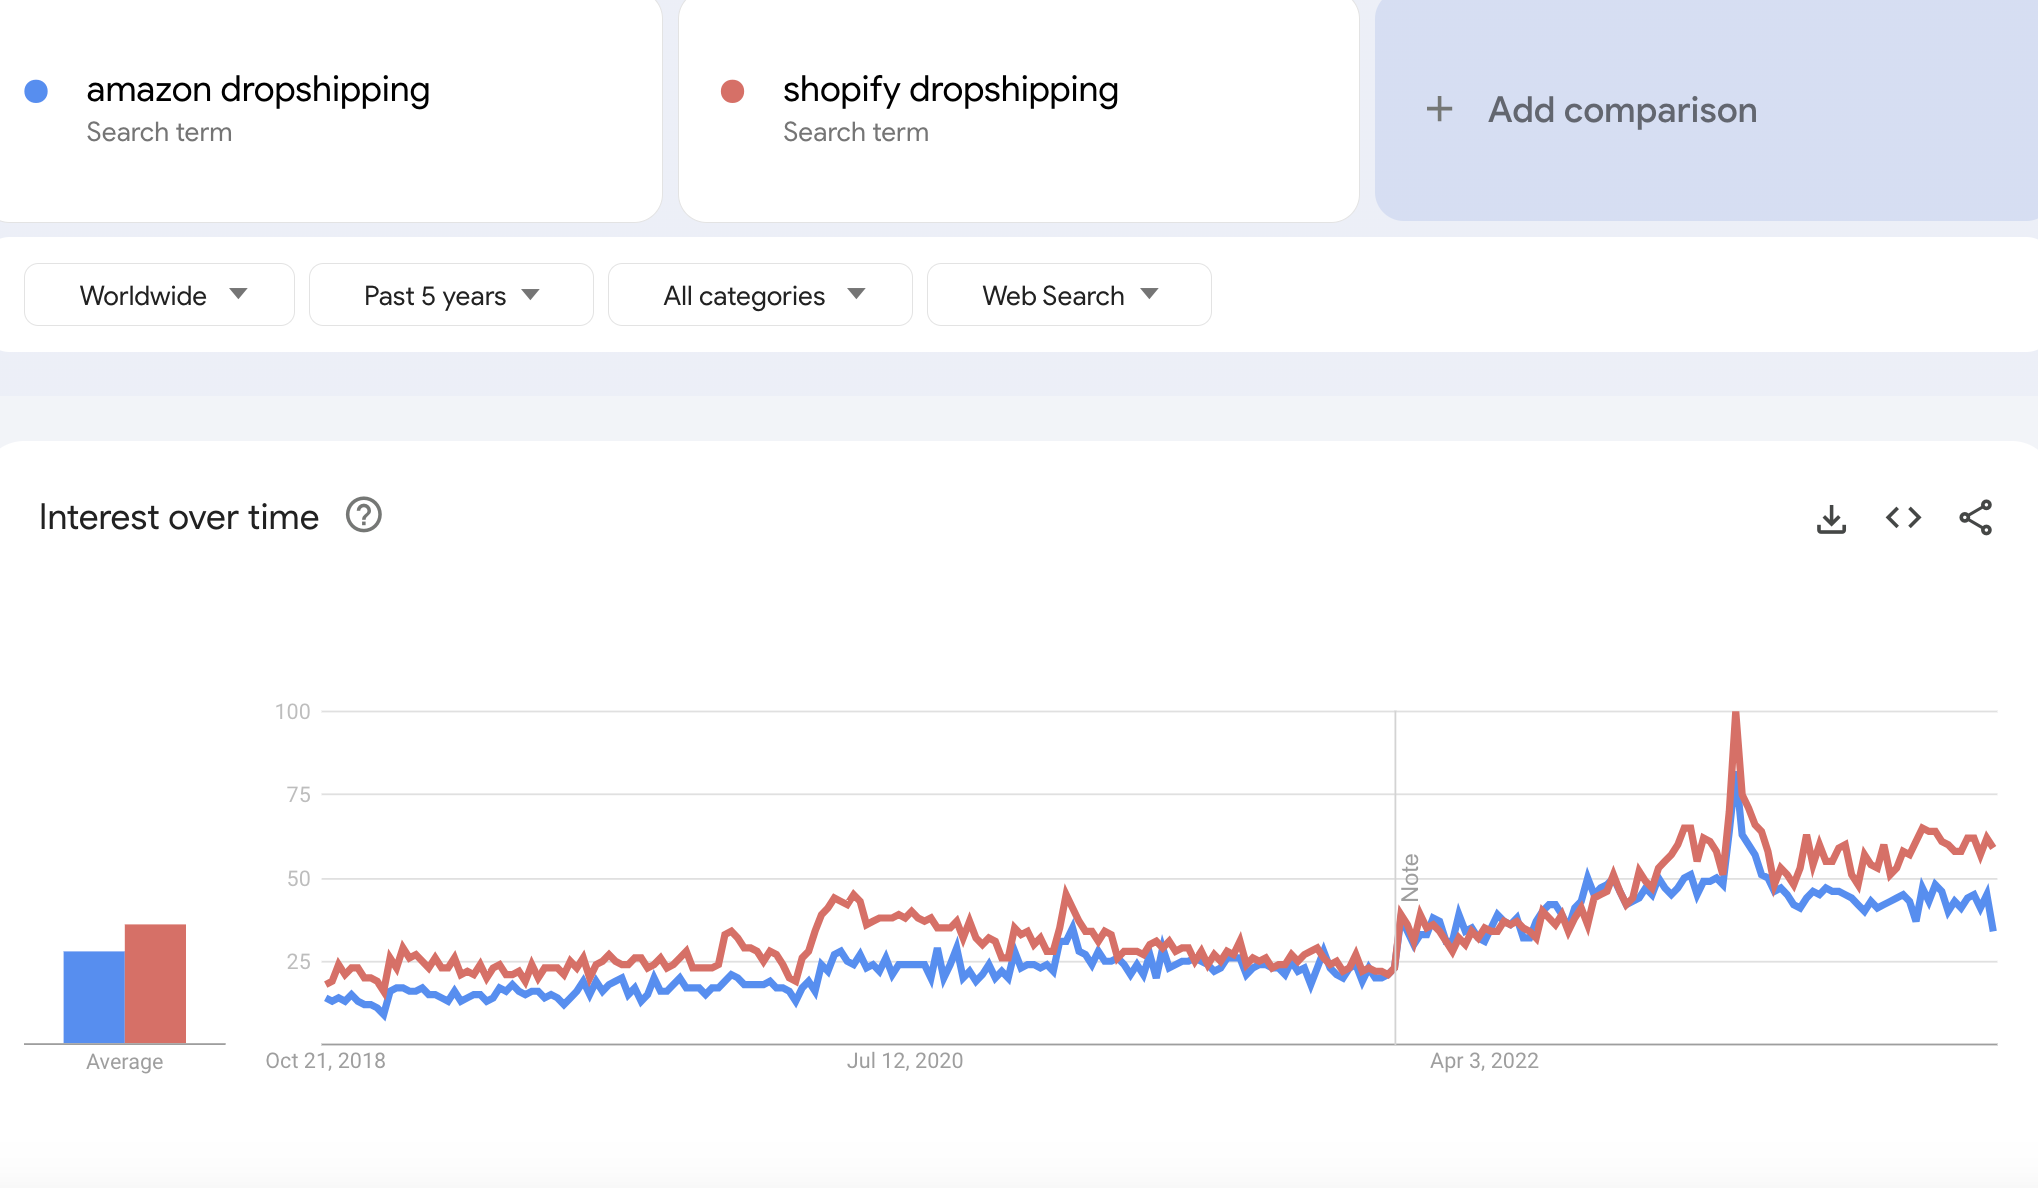 Amazon vs Shopify dropshipping